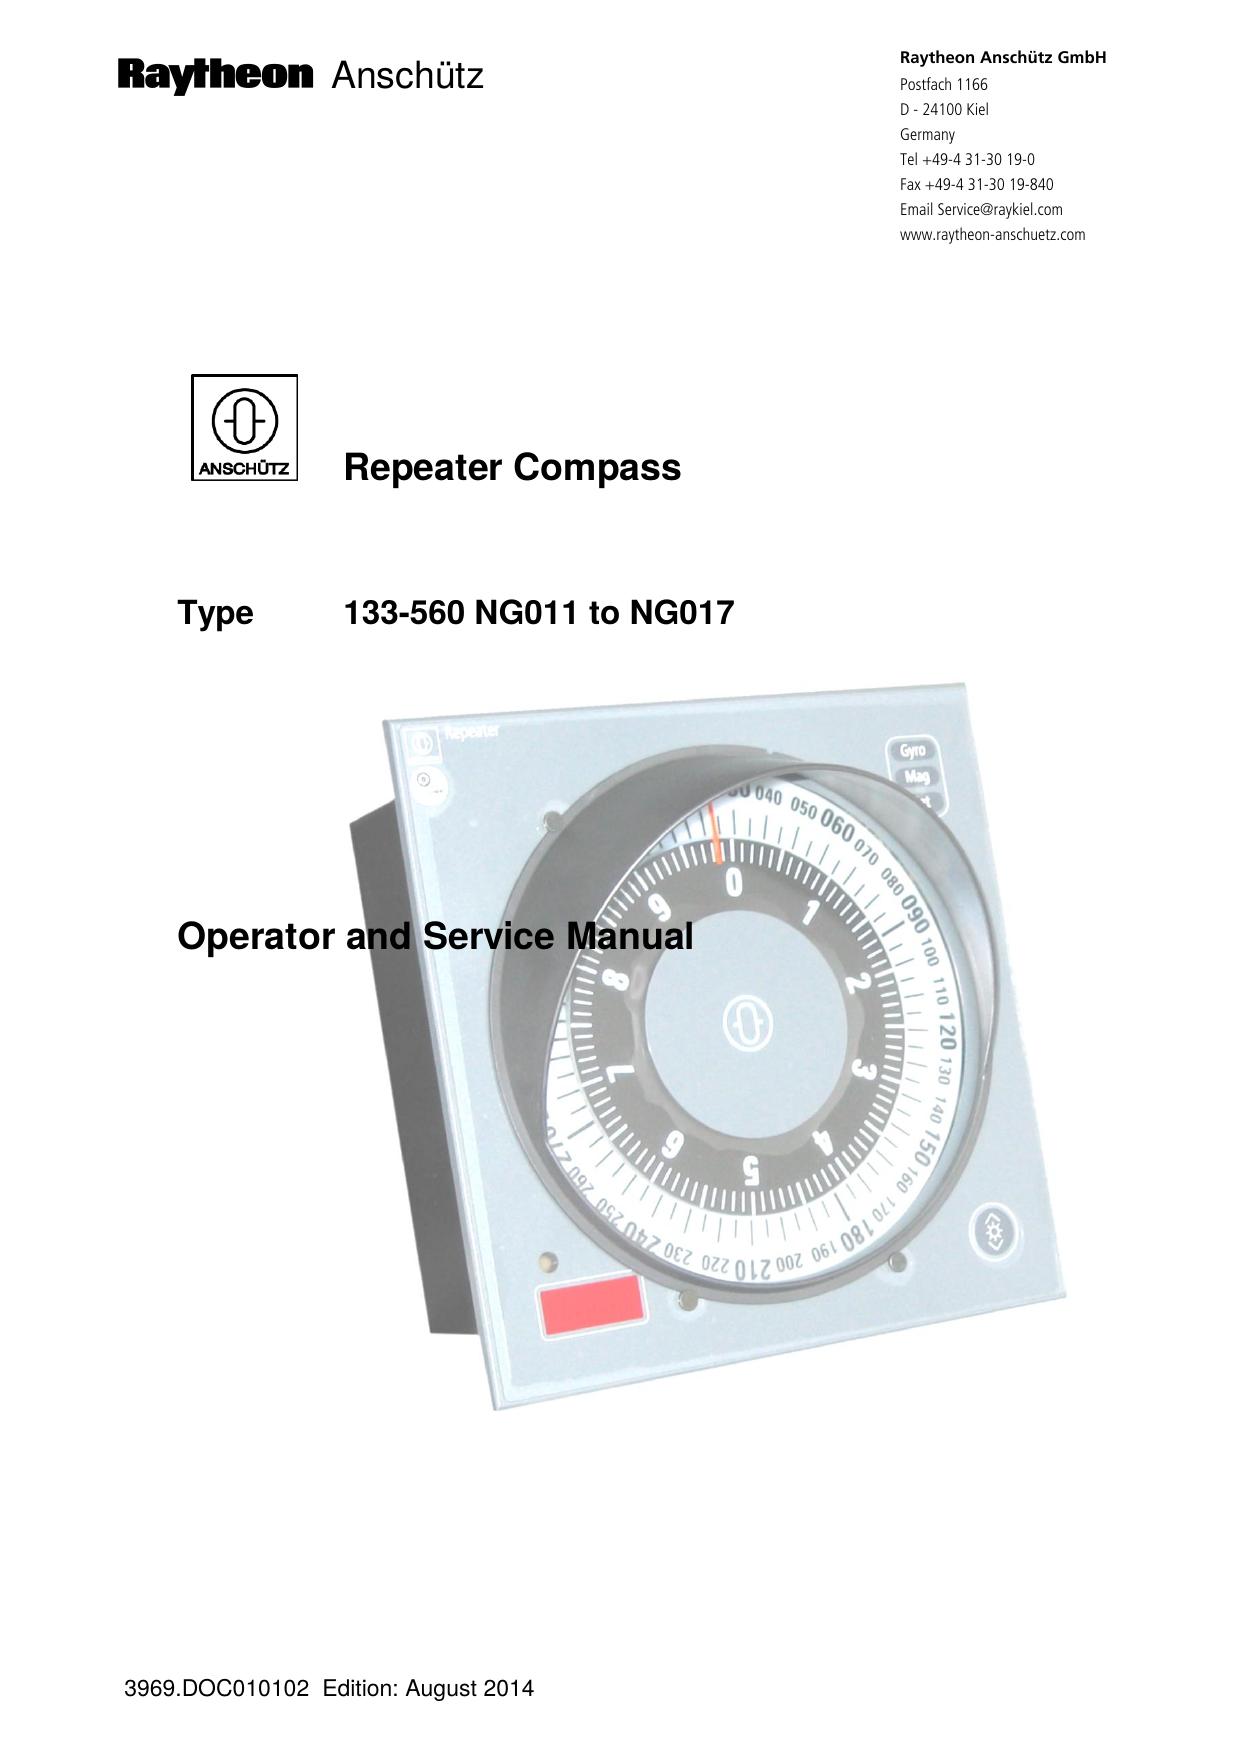 Repeater Compass 133-560 NG011-NG017 by Raytheon Anschütz GmbH